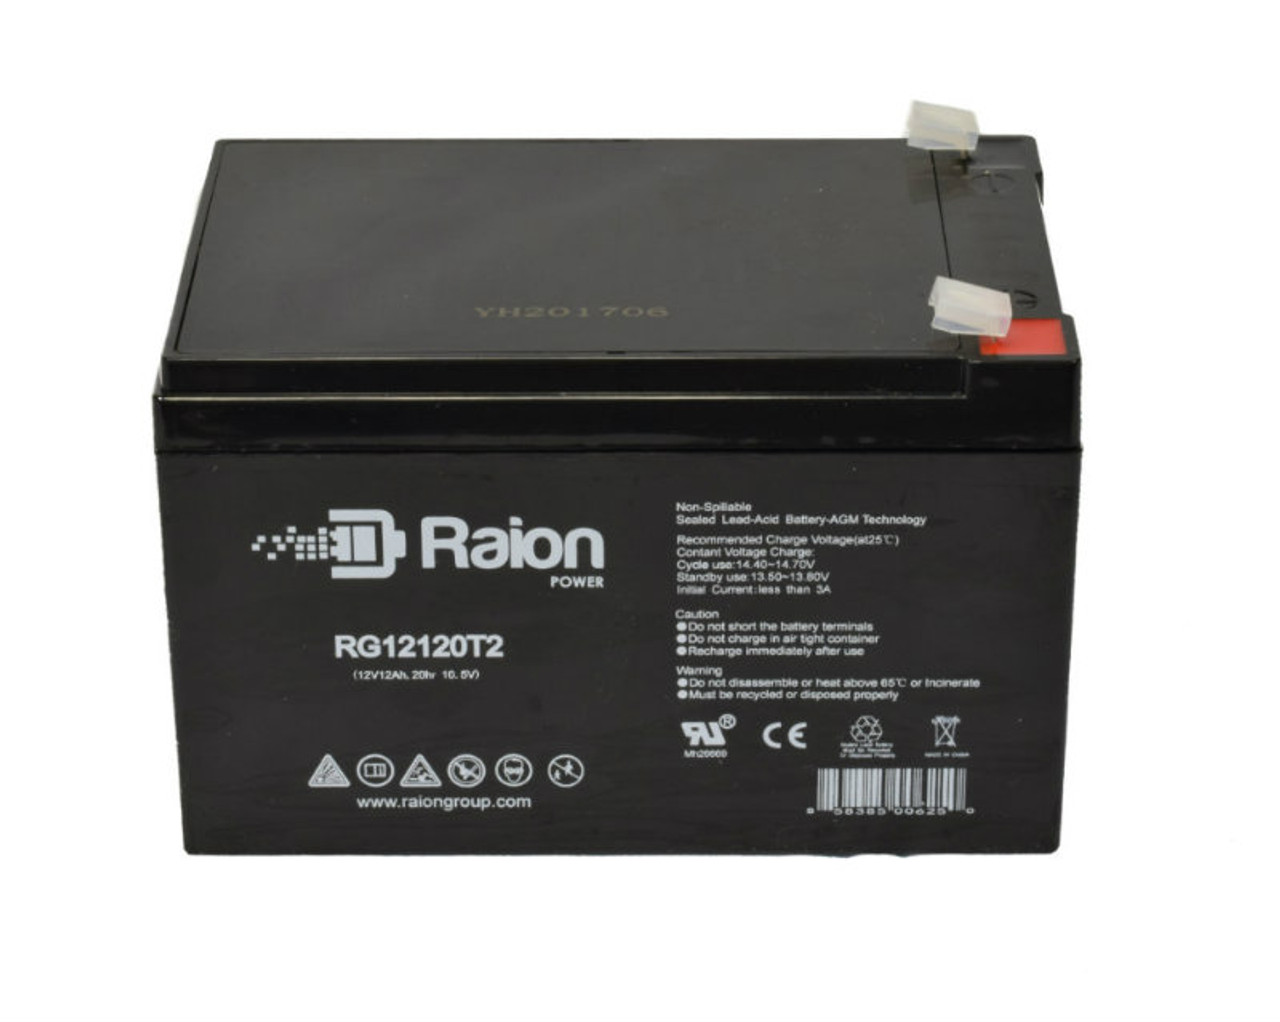 Raion Power RG12120T2 SLA Battery for VCELL 12VC12